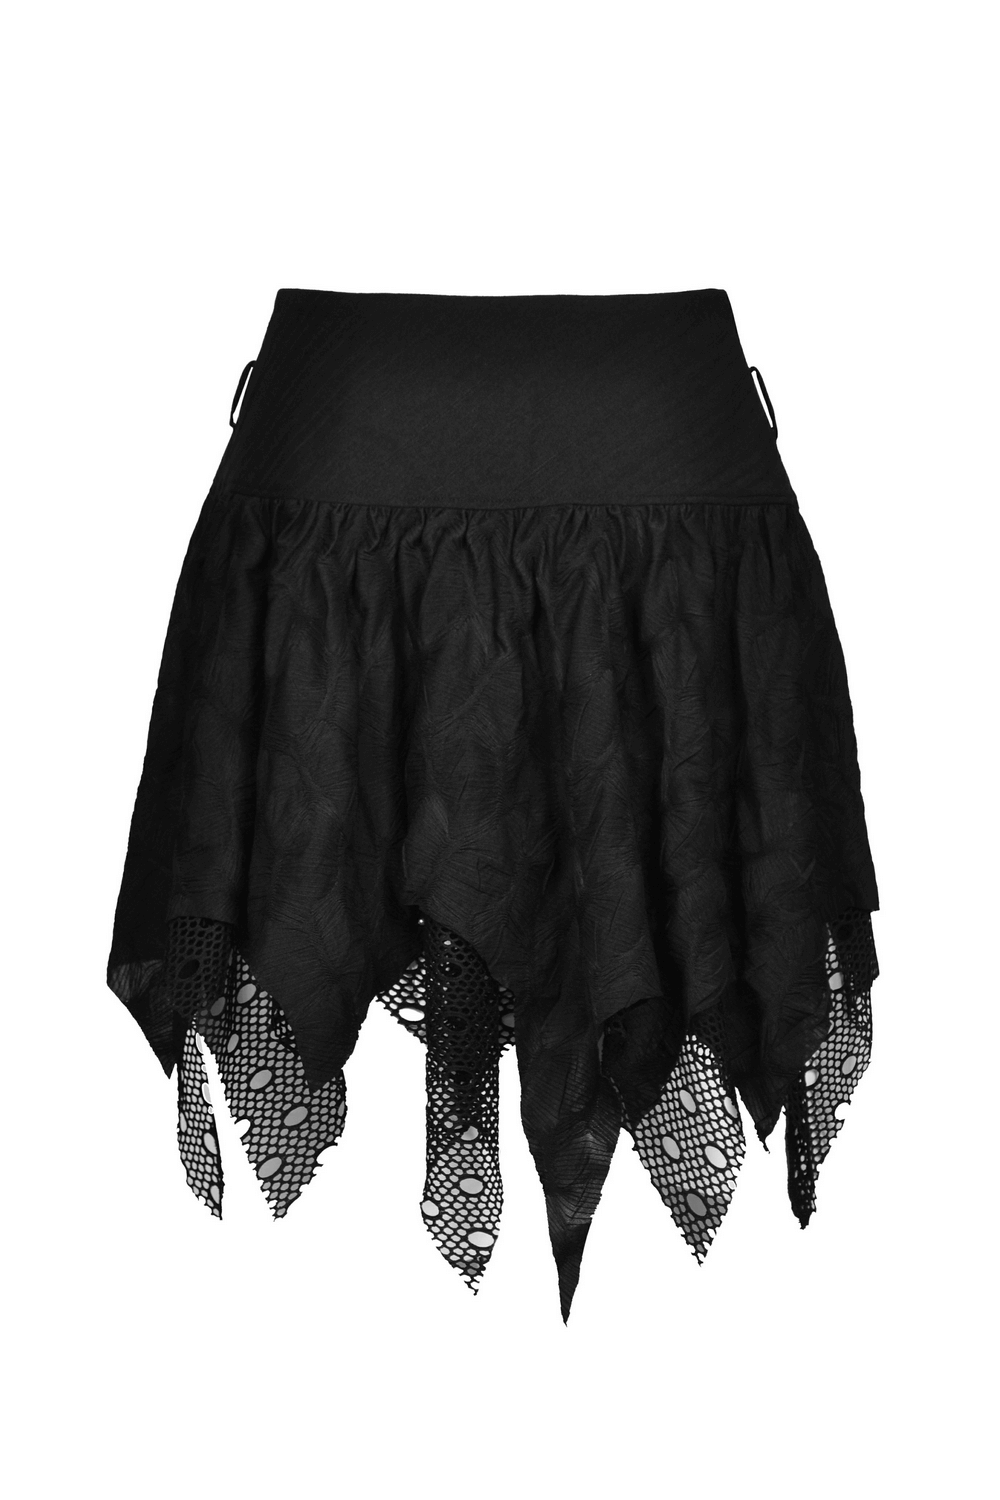 Edgy Mesh Skirt with Lace Trim and Irregular Hem